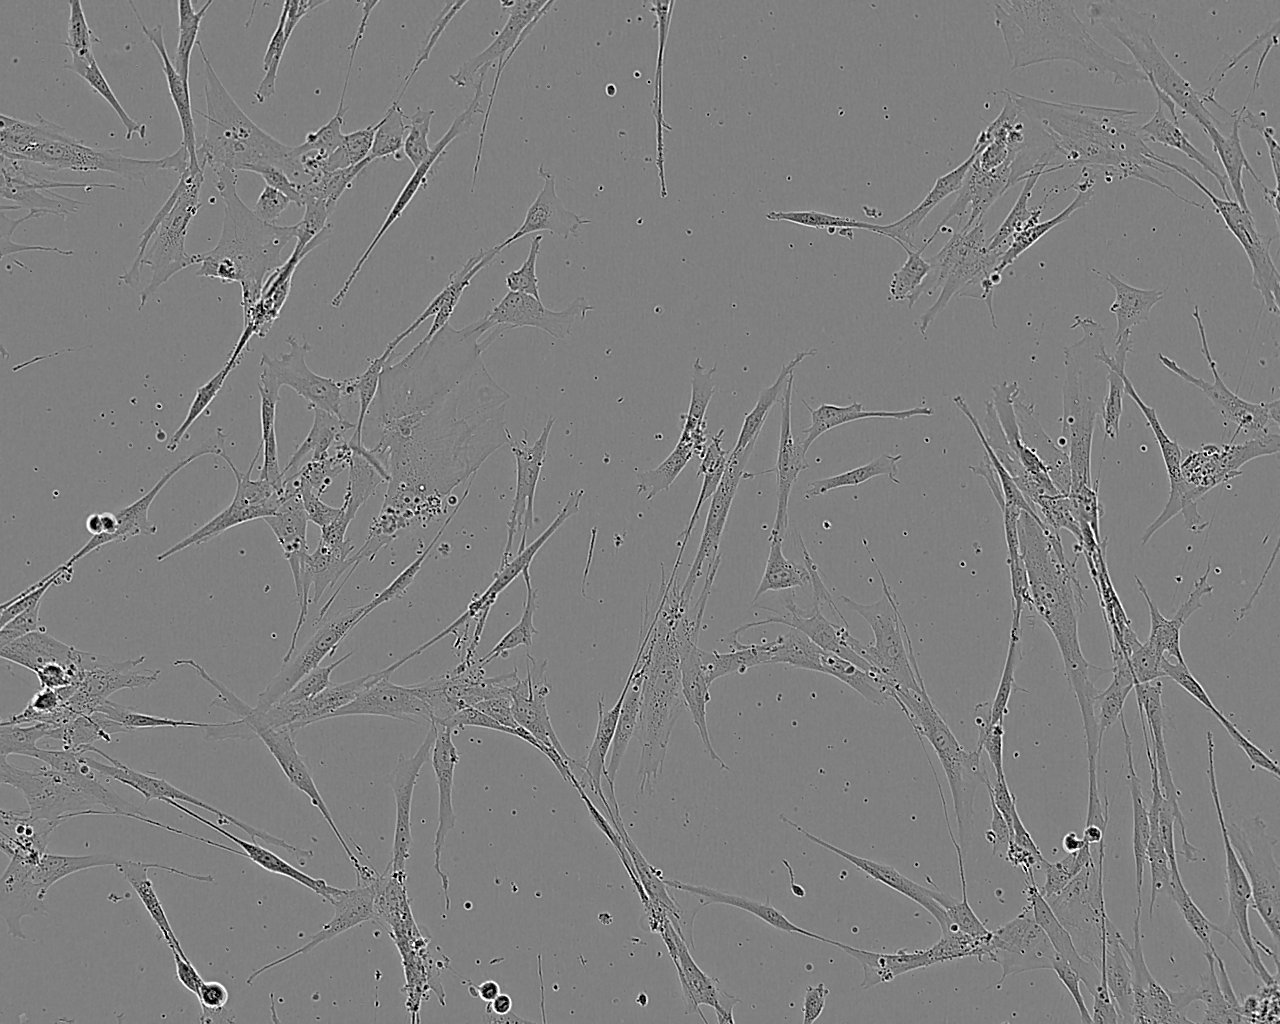 3T6-Swiss albino Cell:小鼠胚胎成纤维细胞系,3T6-Swiss albino Cell